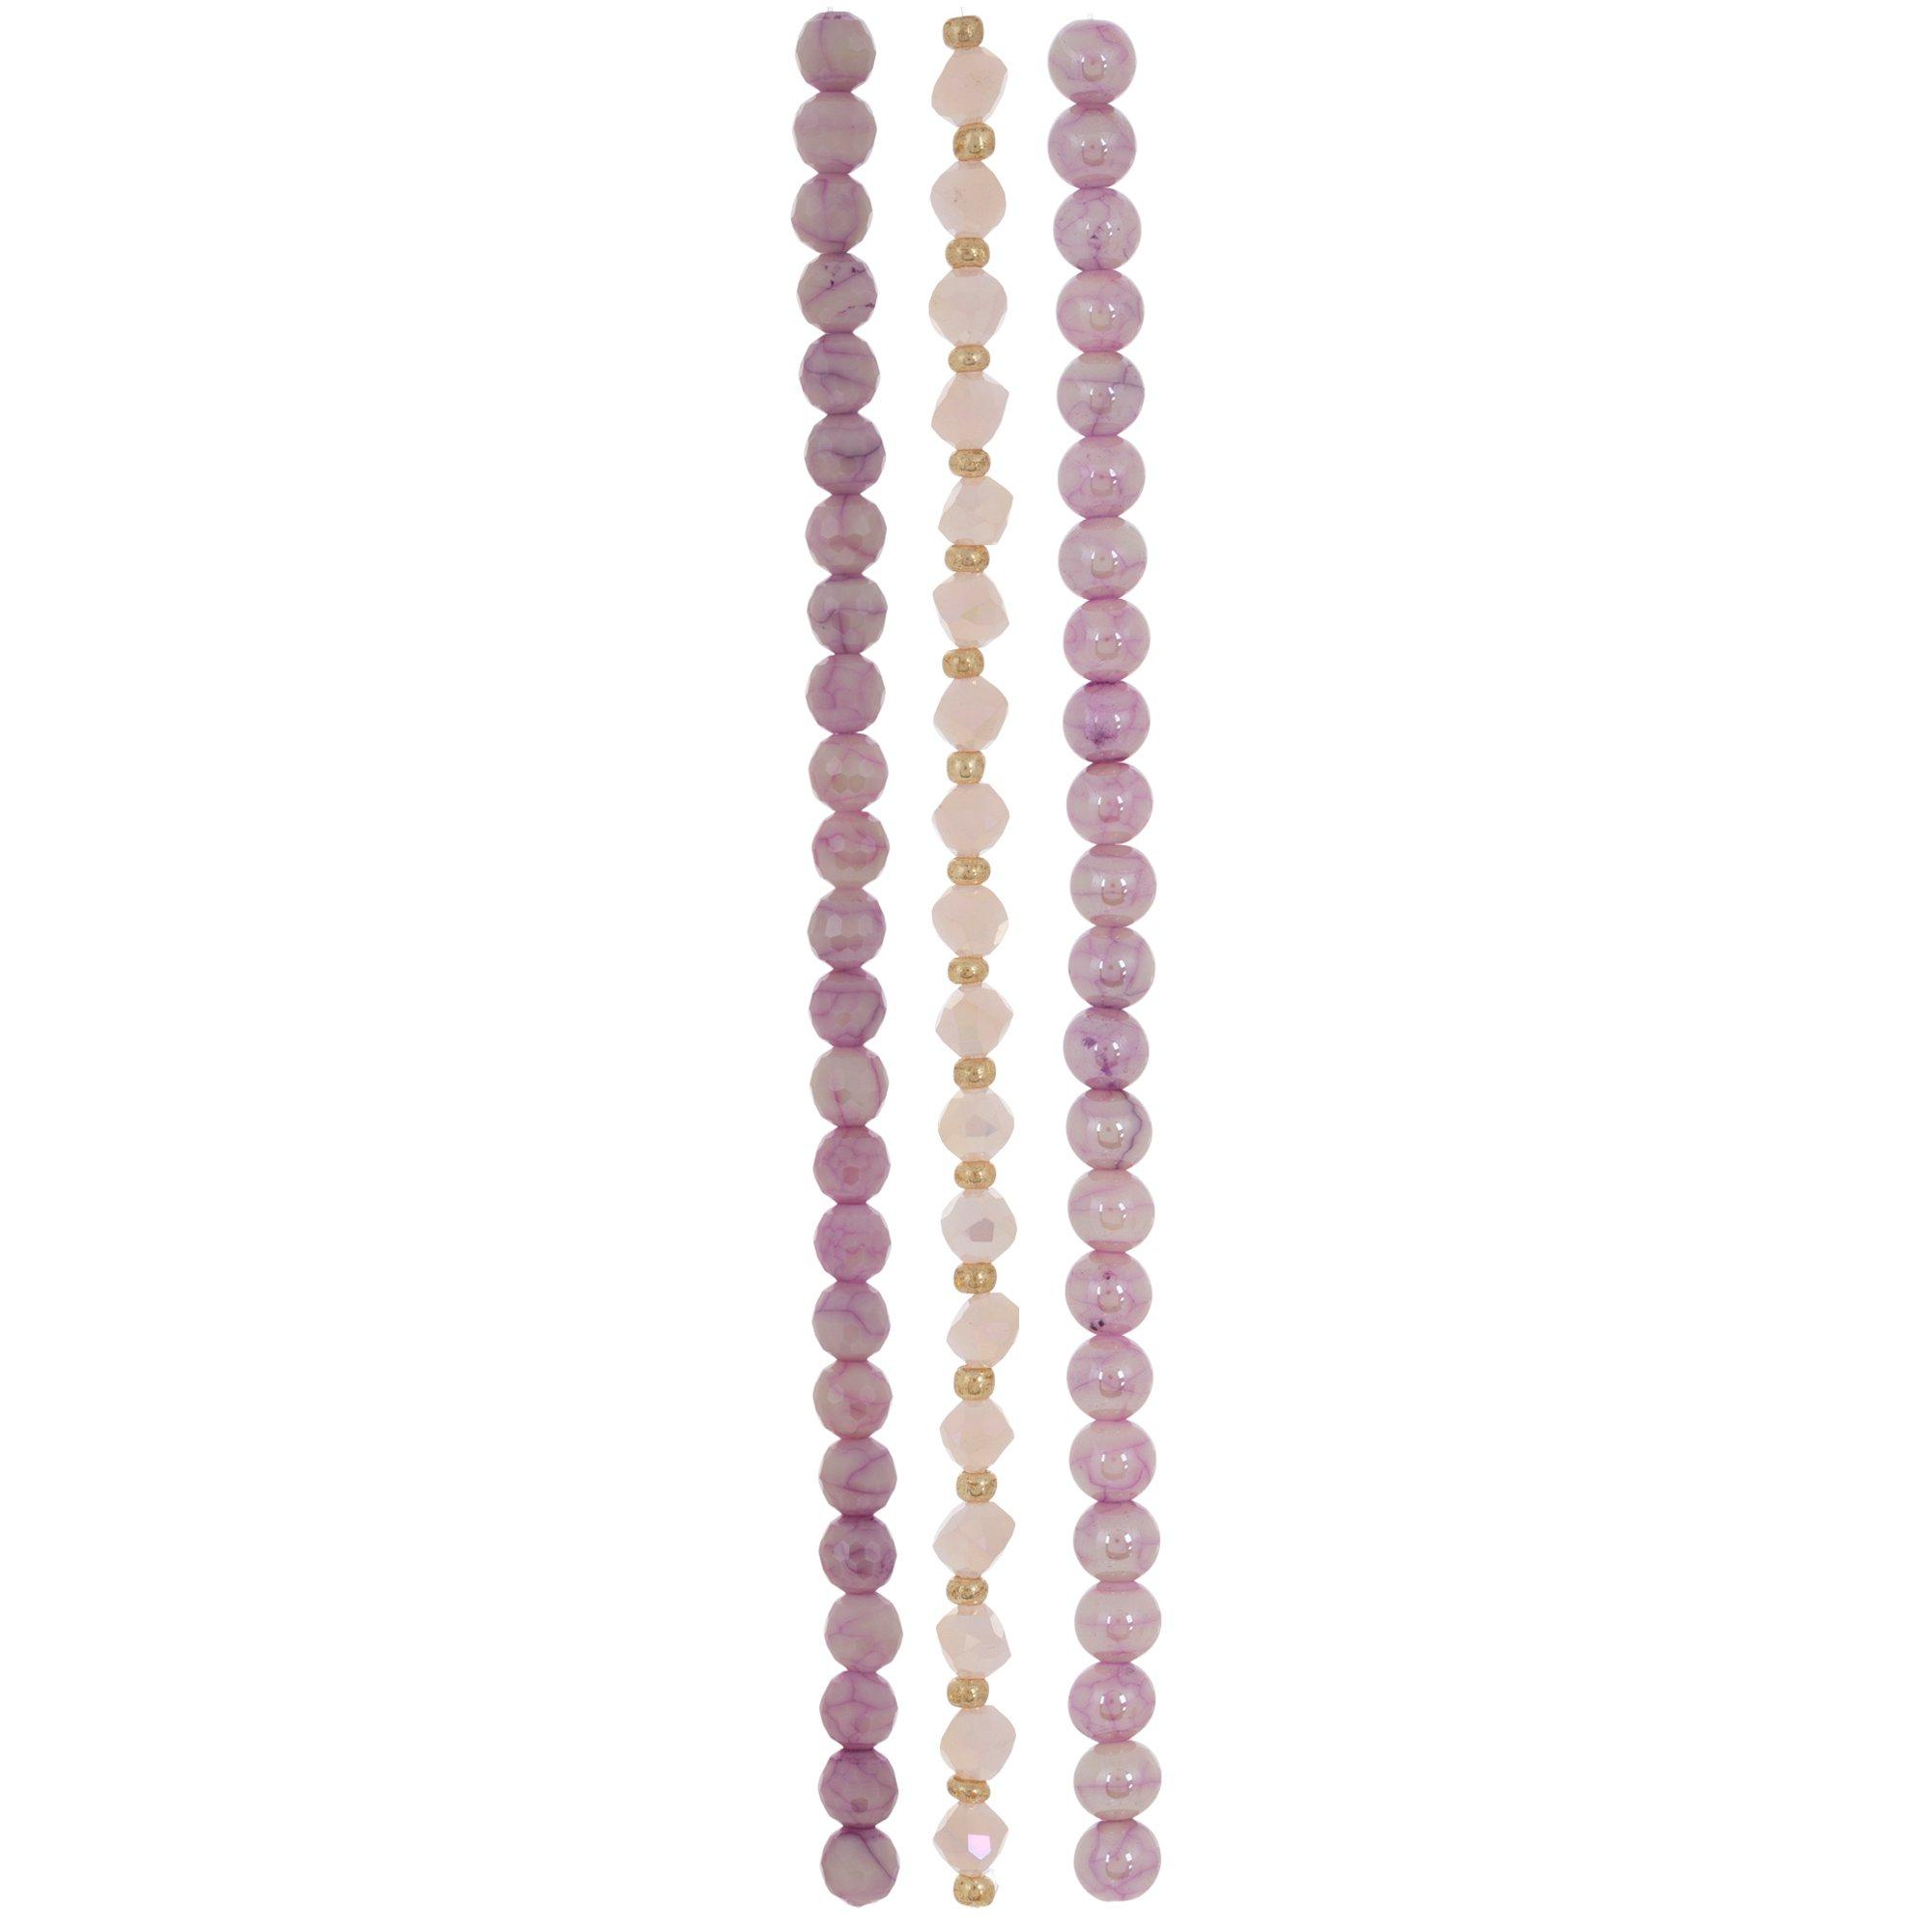 Pink Glass Mermaid Beads, Czech Glass Beads, Beach Jewelry Making